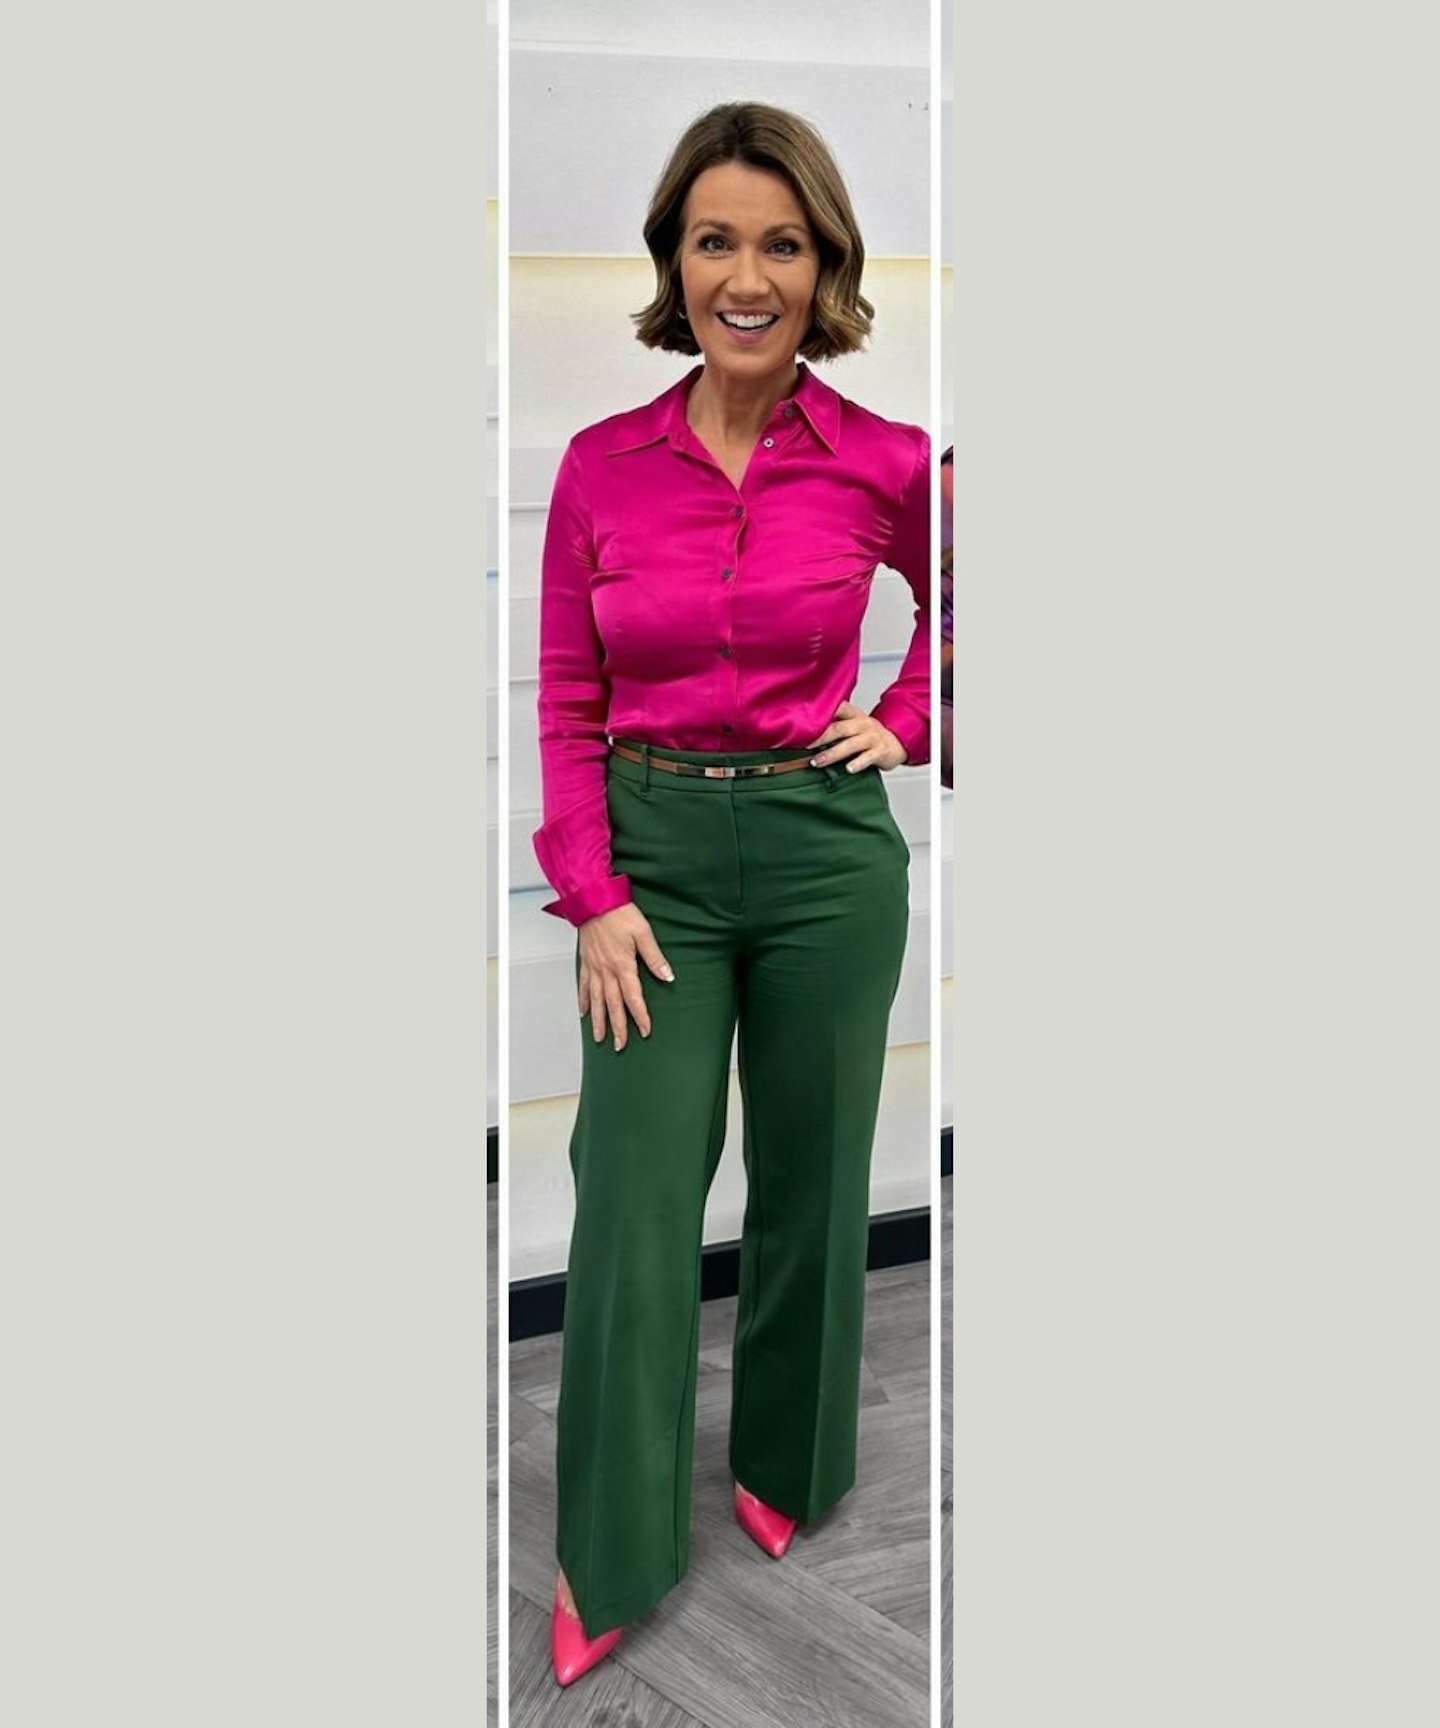 susanna-reid-GMB-pink-shirt-green-trousers-1